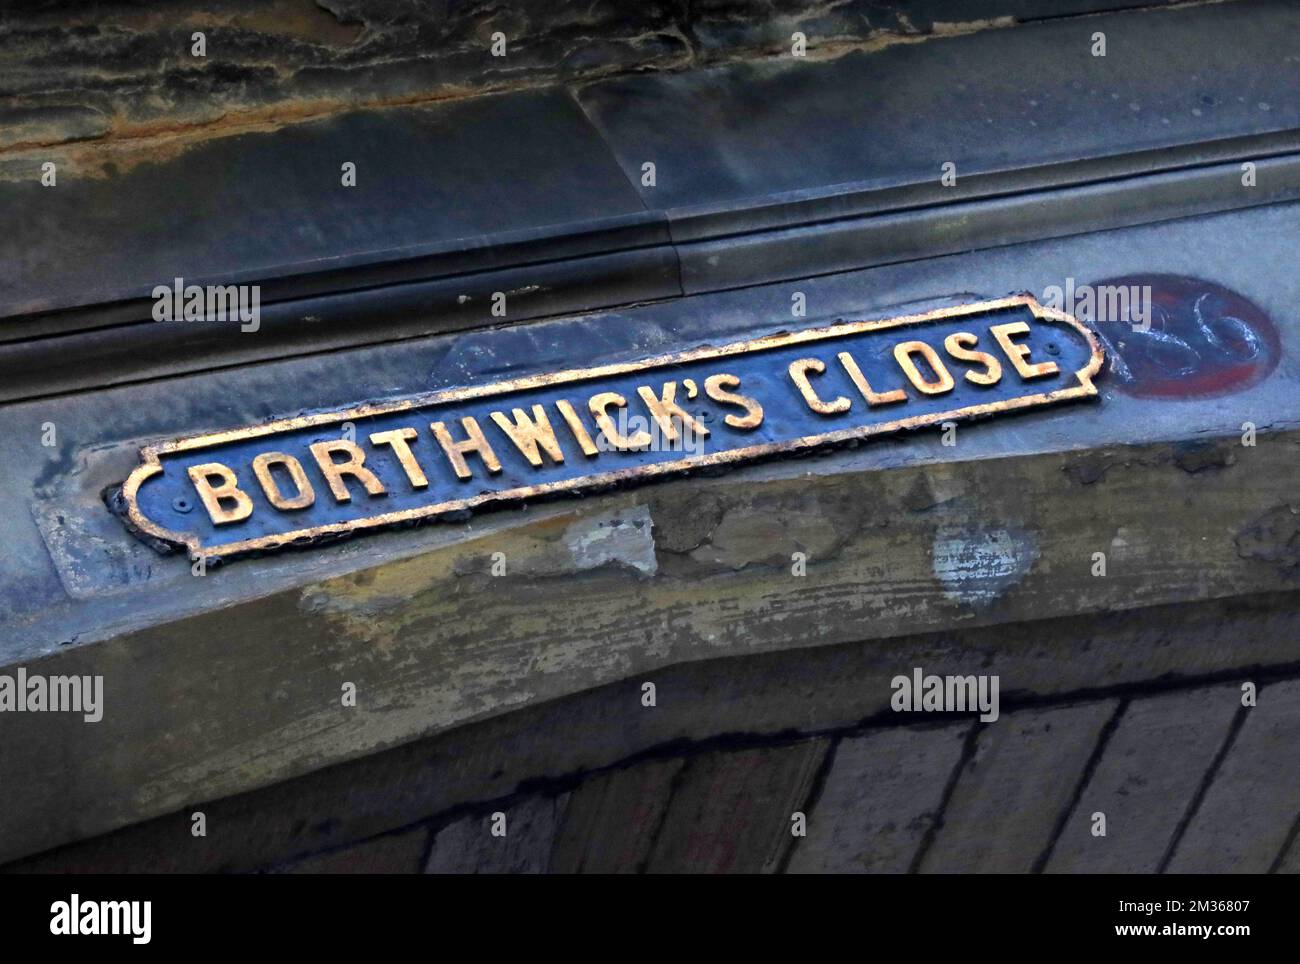 Borthwicks Close, Royal Mile, Edinburgh old town, Lothian, Scotland, UK, EH1 1TB - 1450 Stock Photo